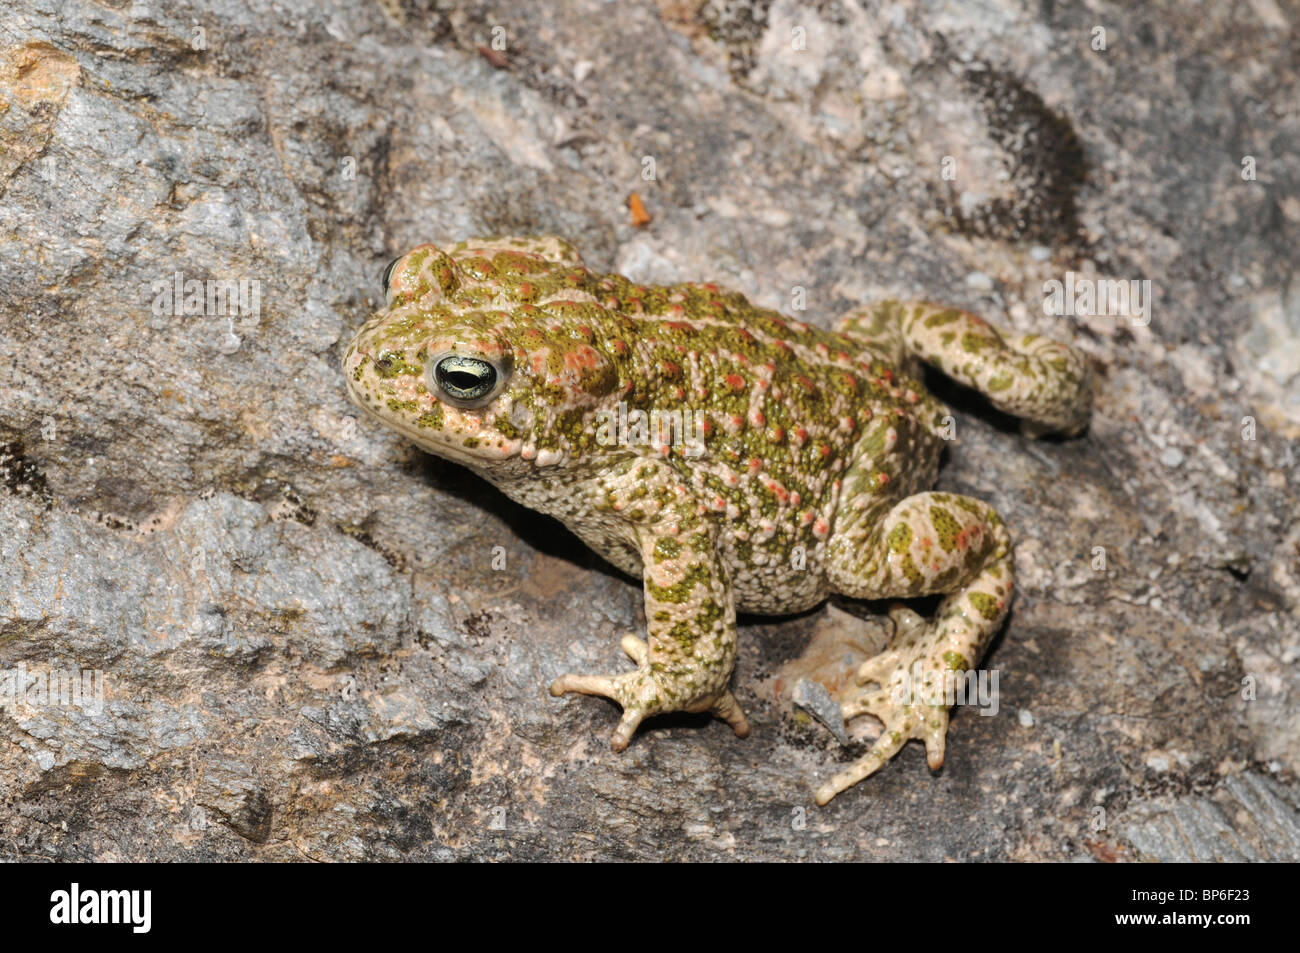 Natterjack toad, natterjack, British toad (Bufo calamita), su roccia, Spagna Murcia Foto Stock